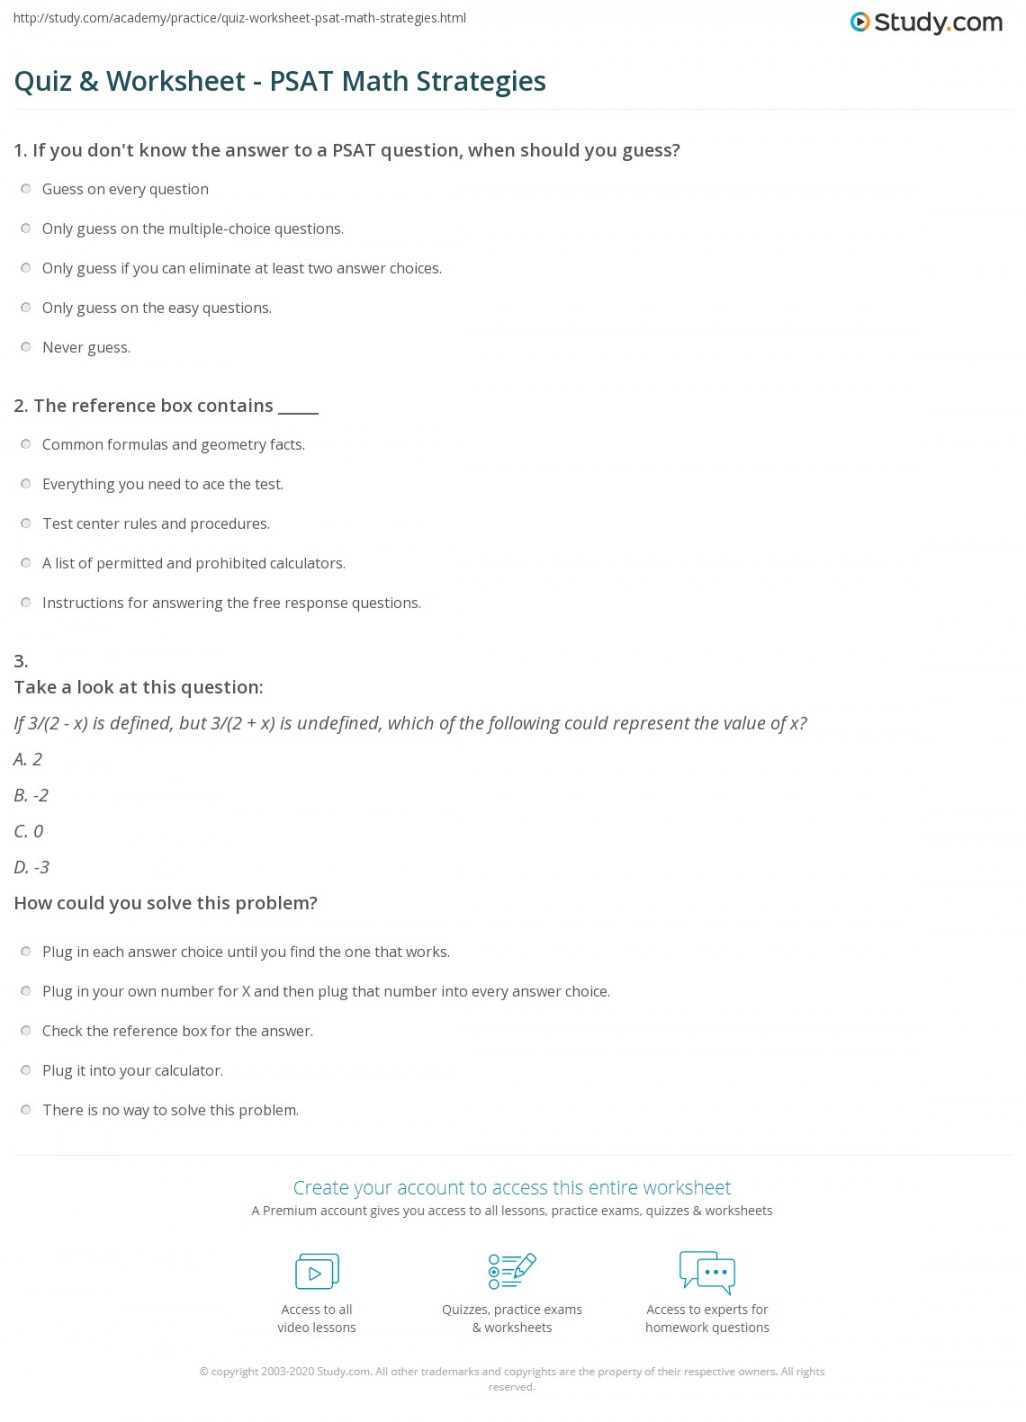 Quiz & Worksheet - PSAT Math Strategies  Study